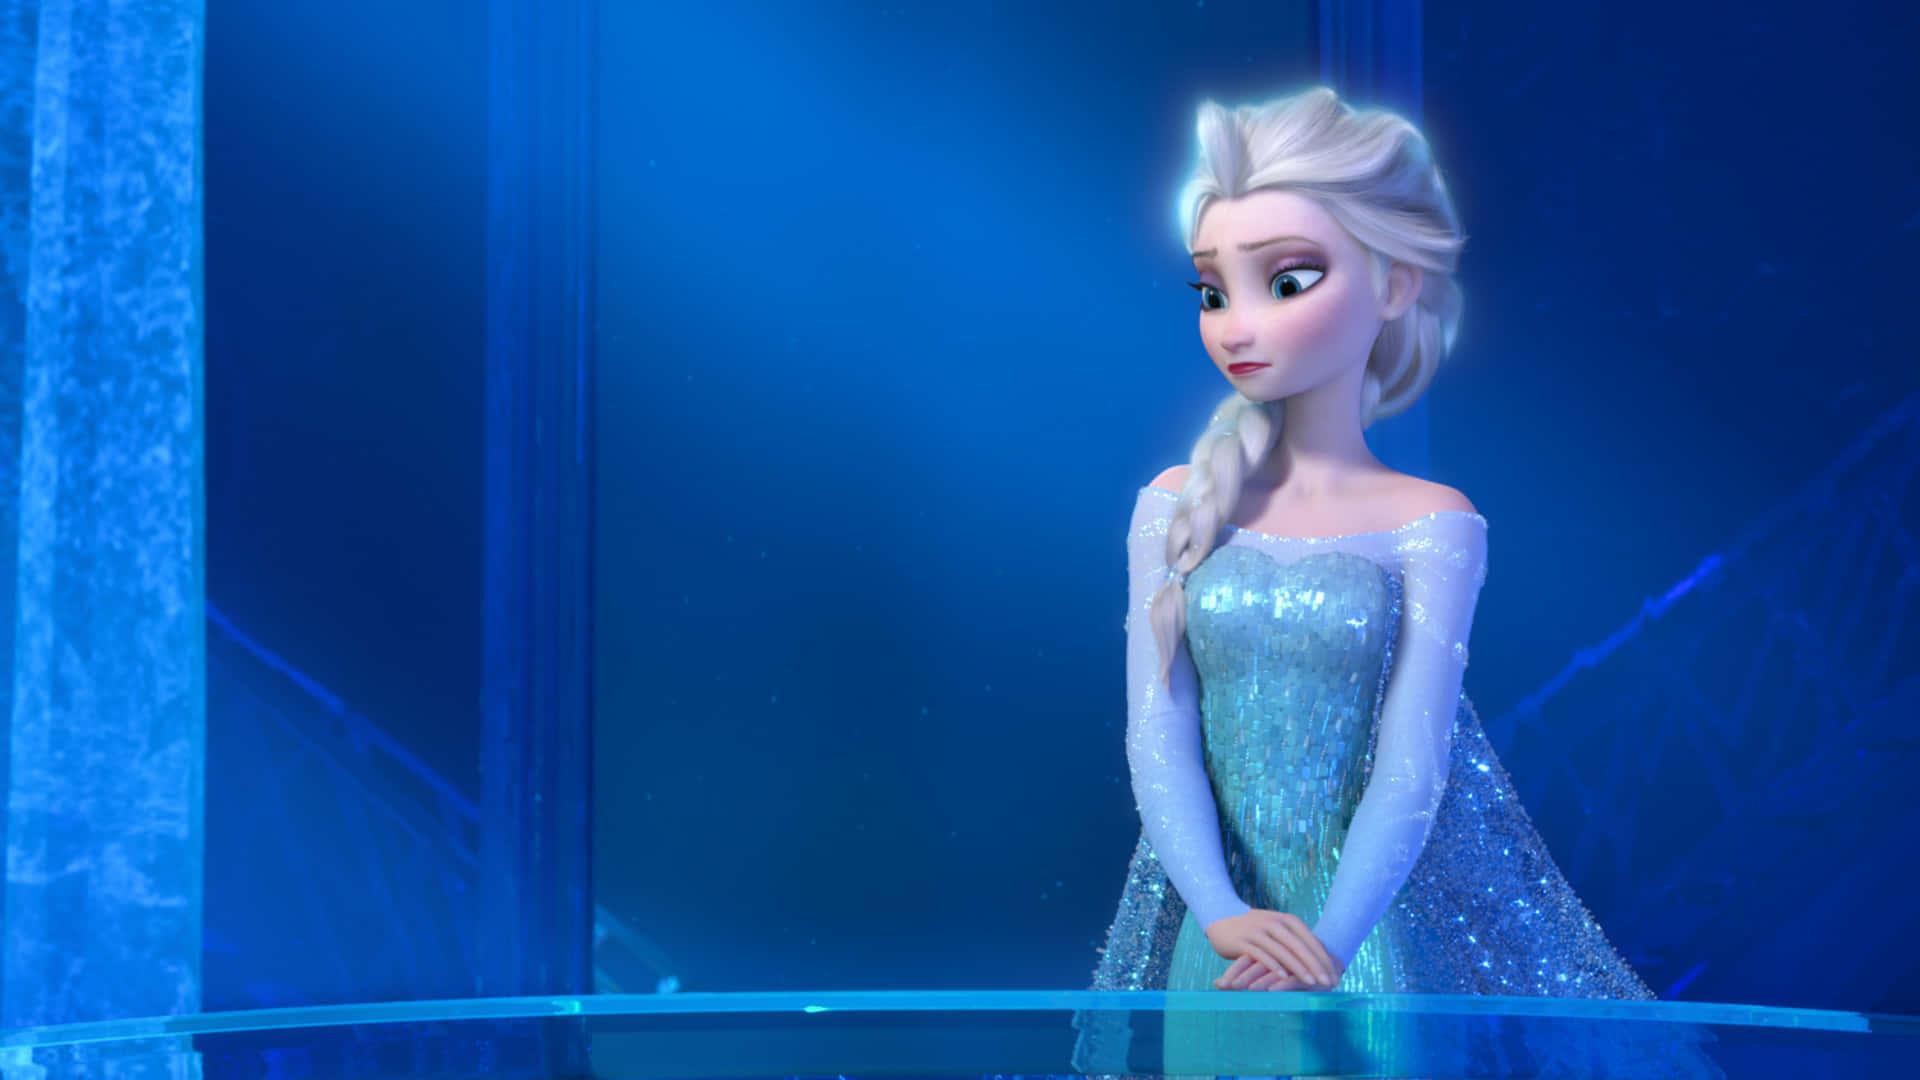 Let Your Magic Shine - Elsa